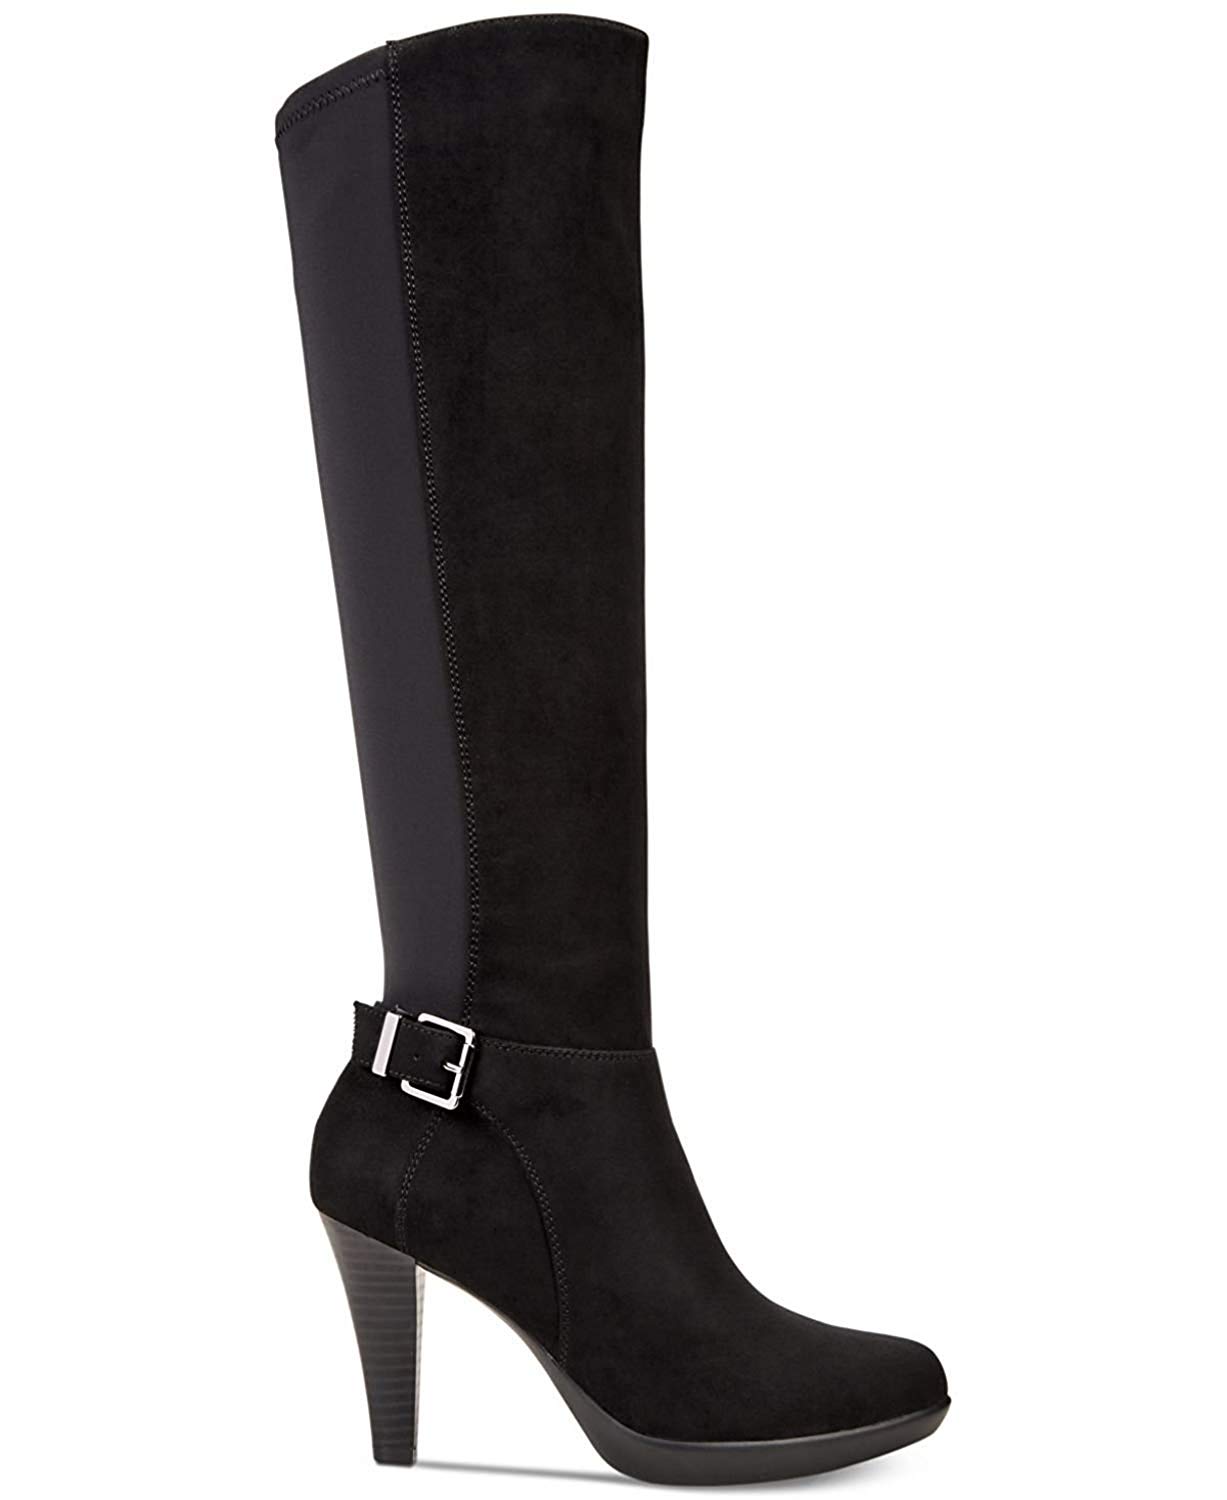 Alfani Womens Boots in Grey Color, Size 5 SJU | eBay